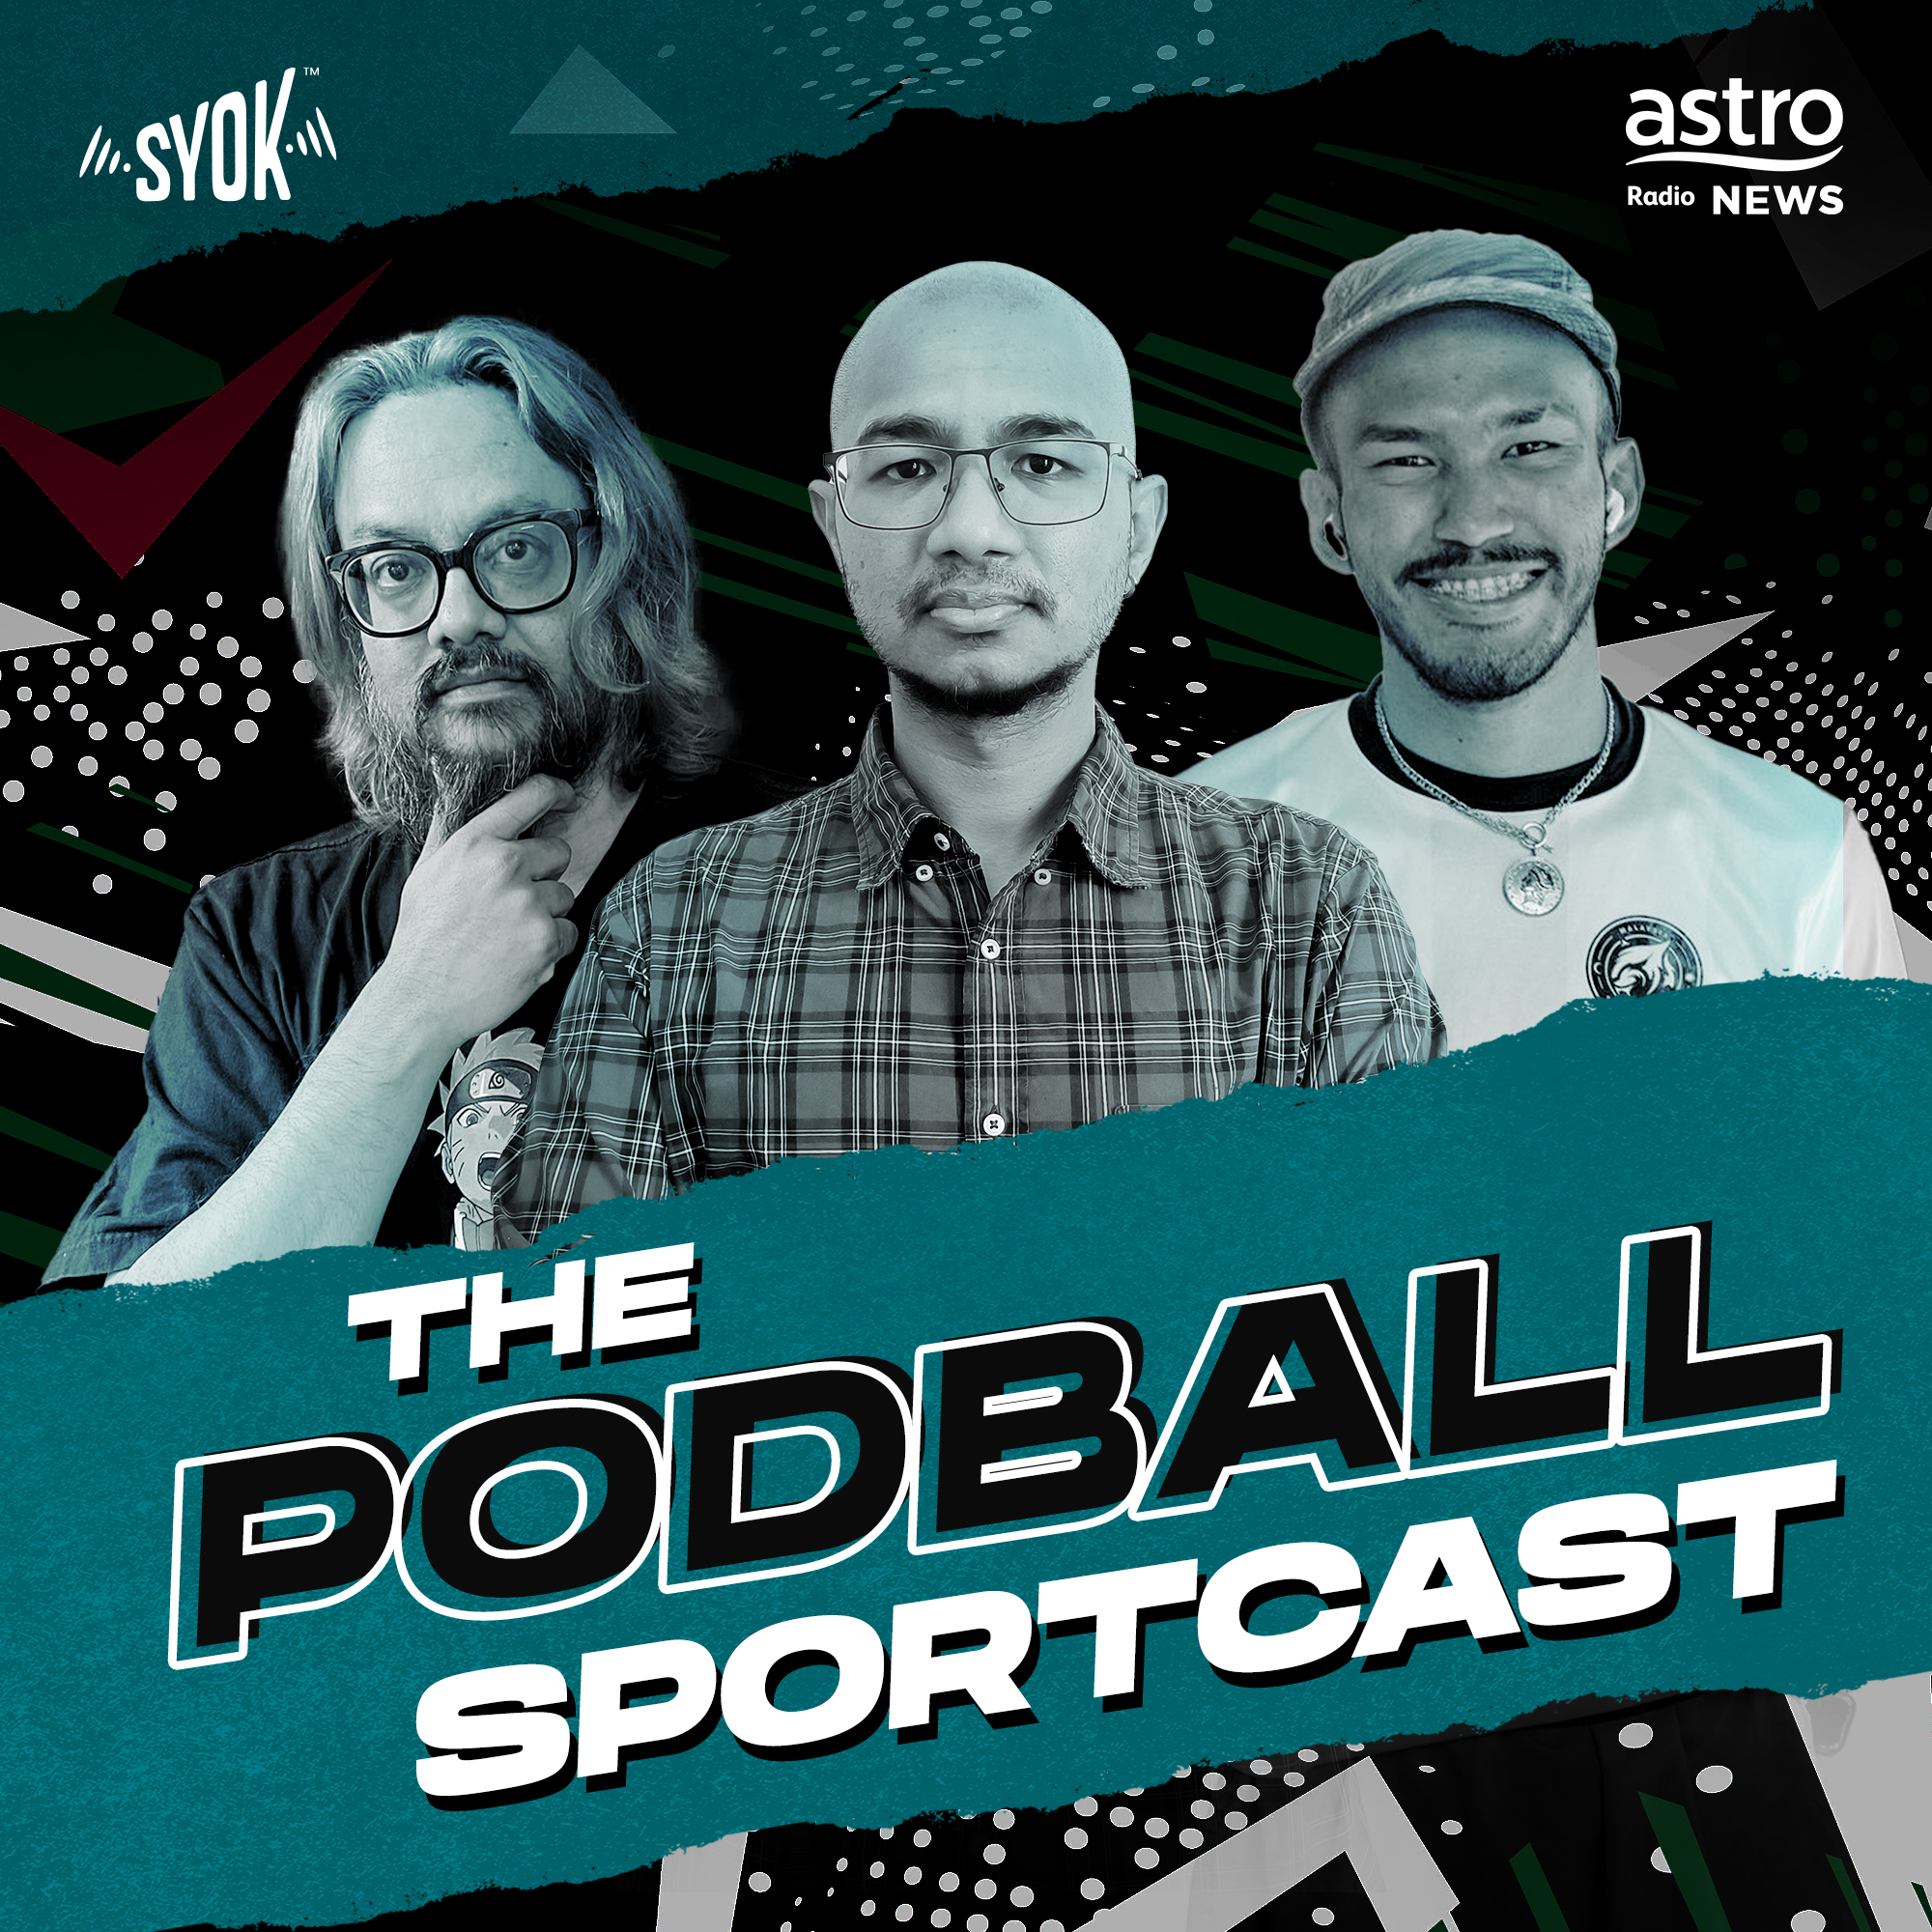 The Podball Sportscast - SYOK Podcast [ENG]